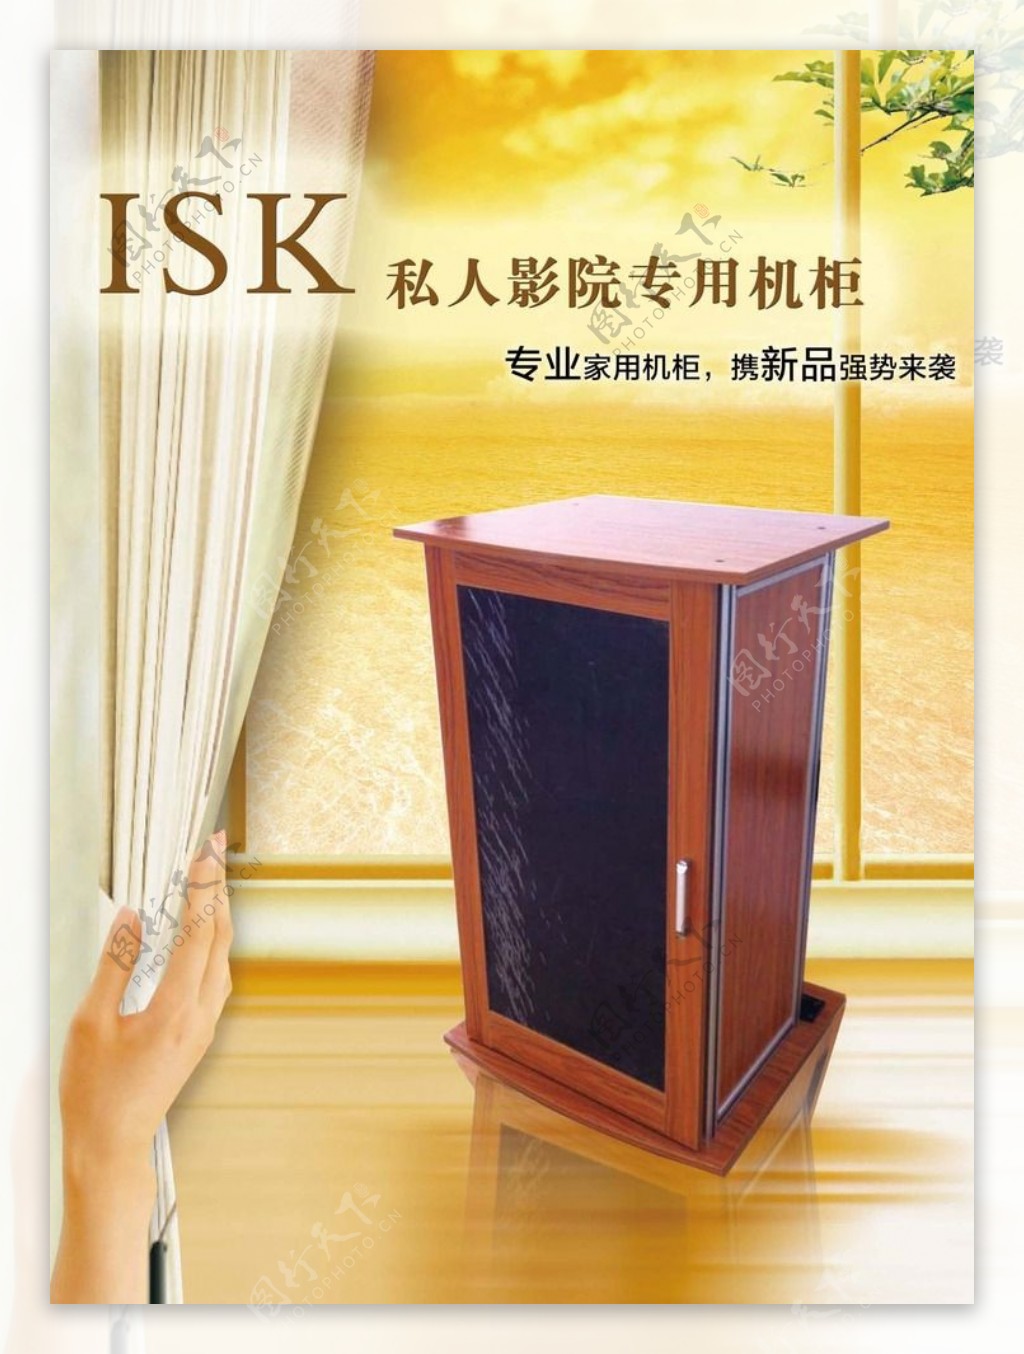 ISK私人影院专用机柜图片